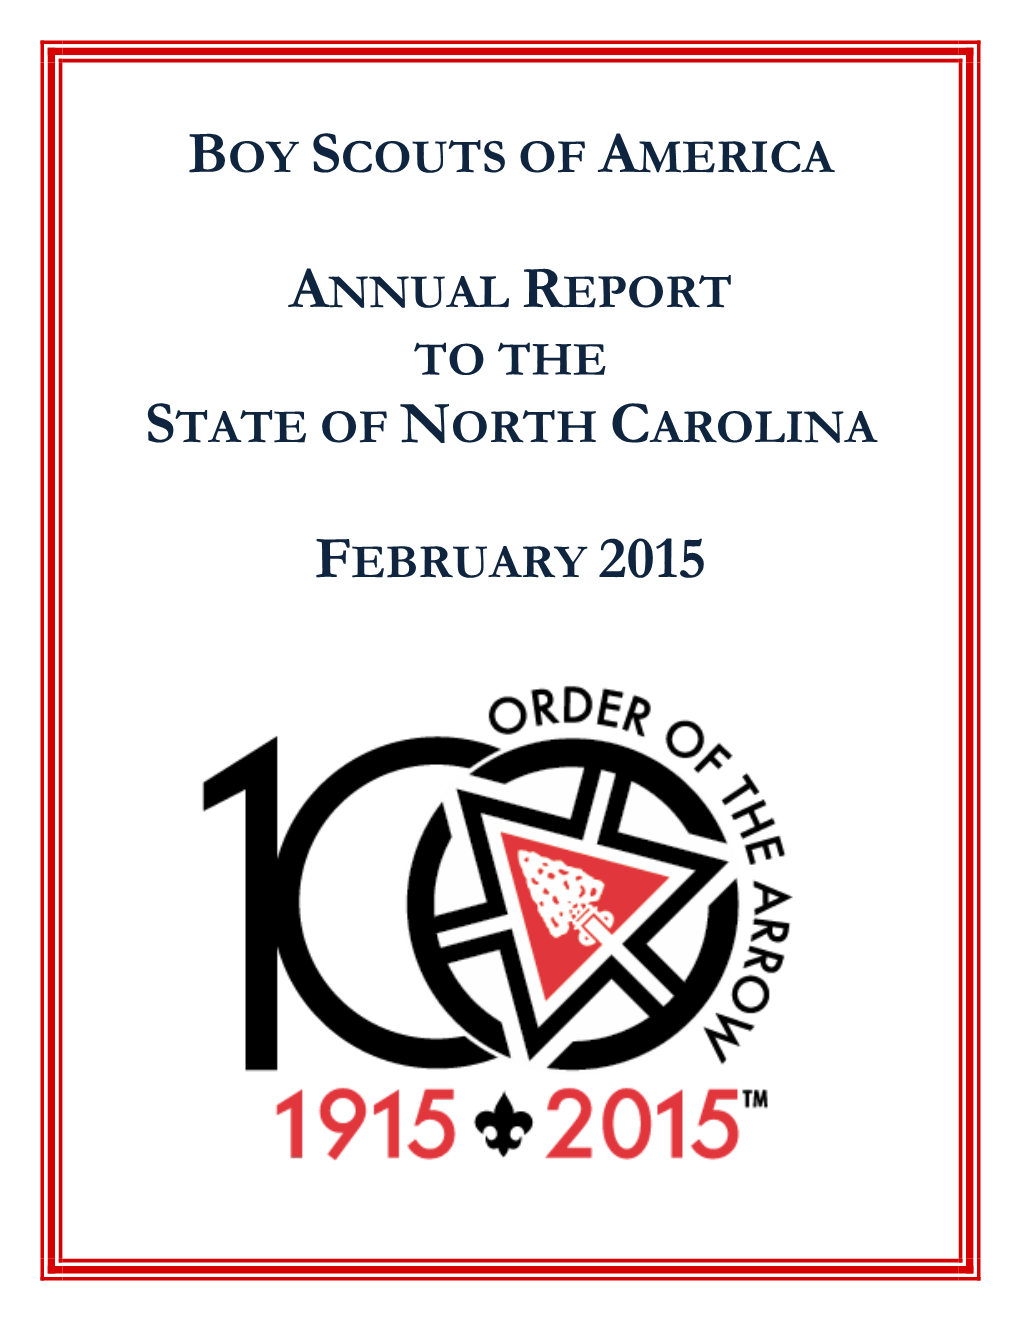 State of North Carolina February 2015